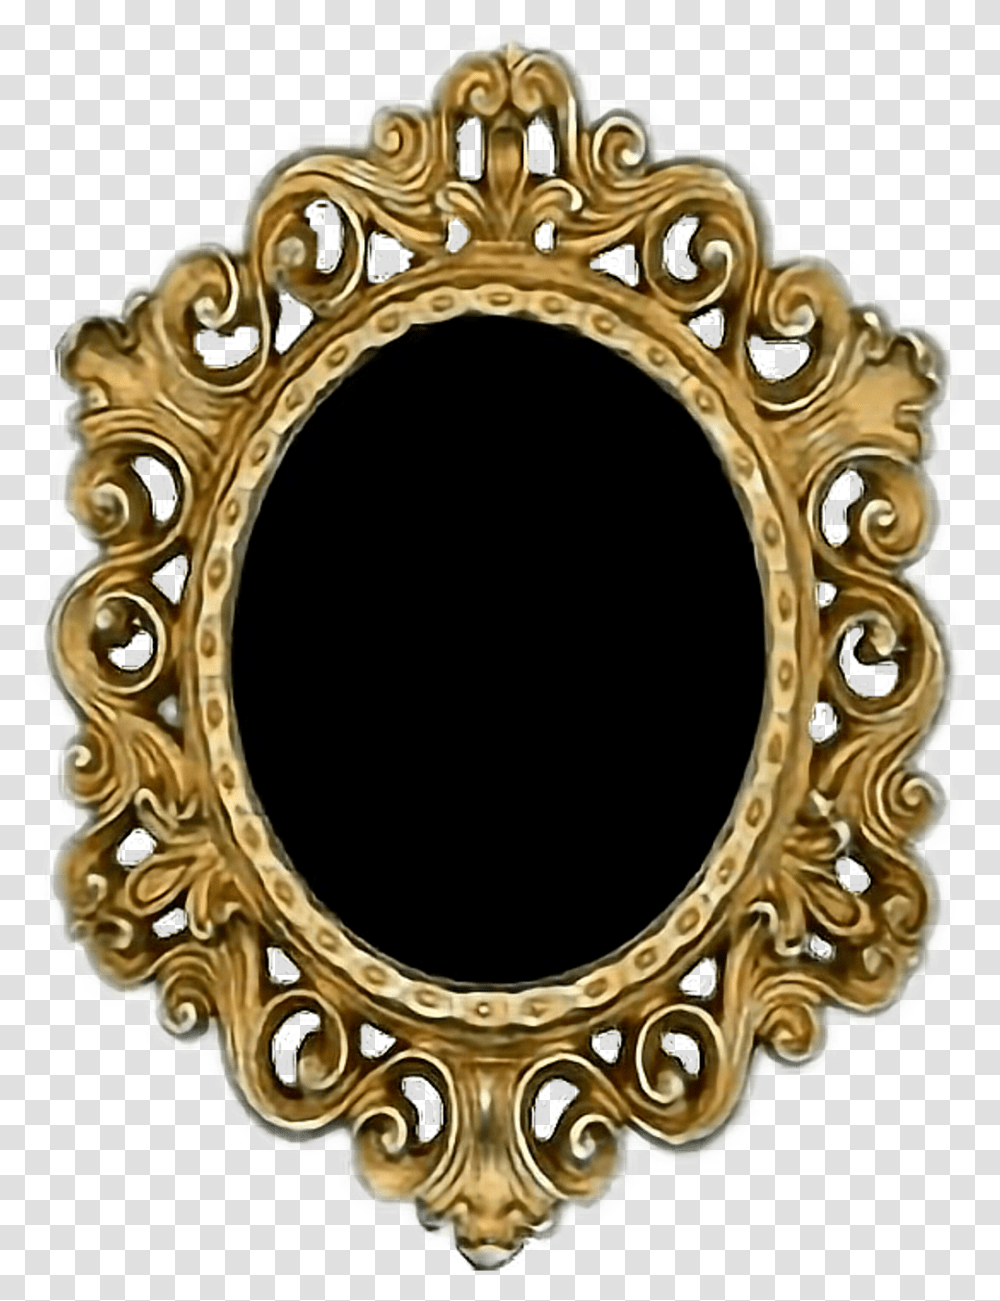 Templates Mirror Overlay Golden Frame Overlaysfreetoedit Golden Frame Overlay Transparent Png